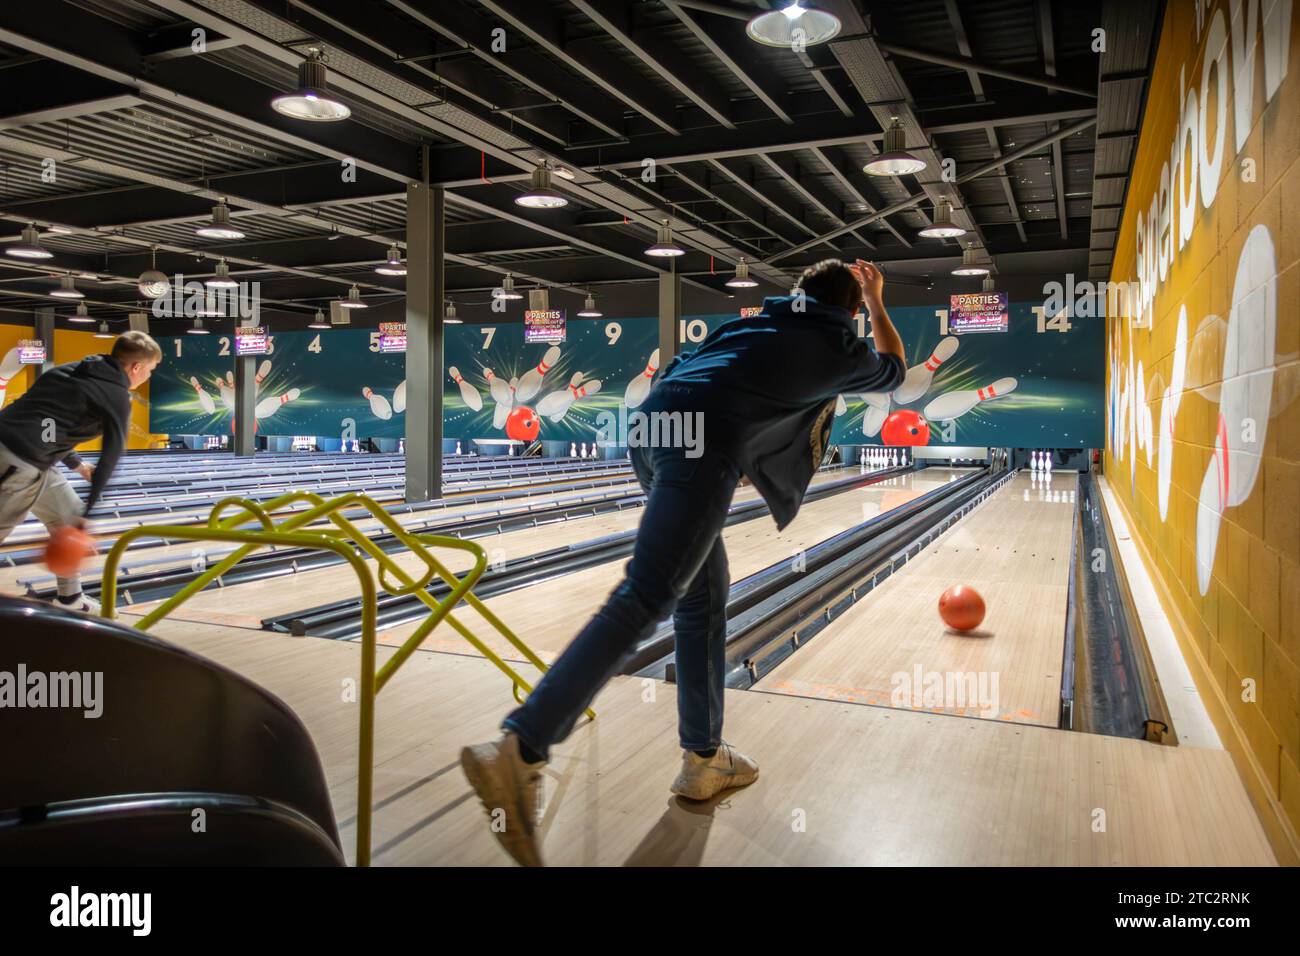 A teenager bowls a bowling ball down a lane at a 10-pin bowling alley Stock Photo